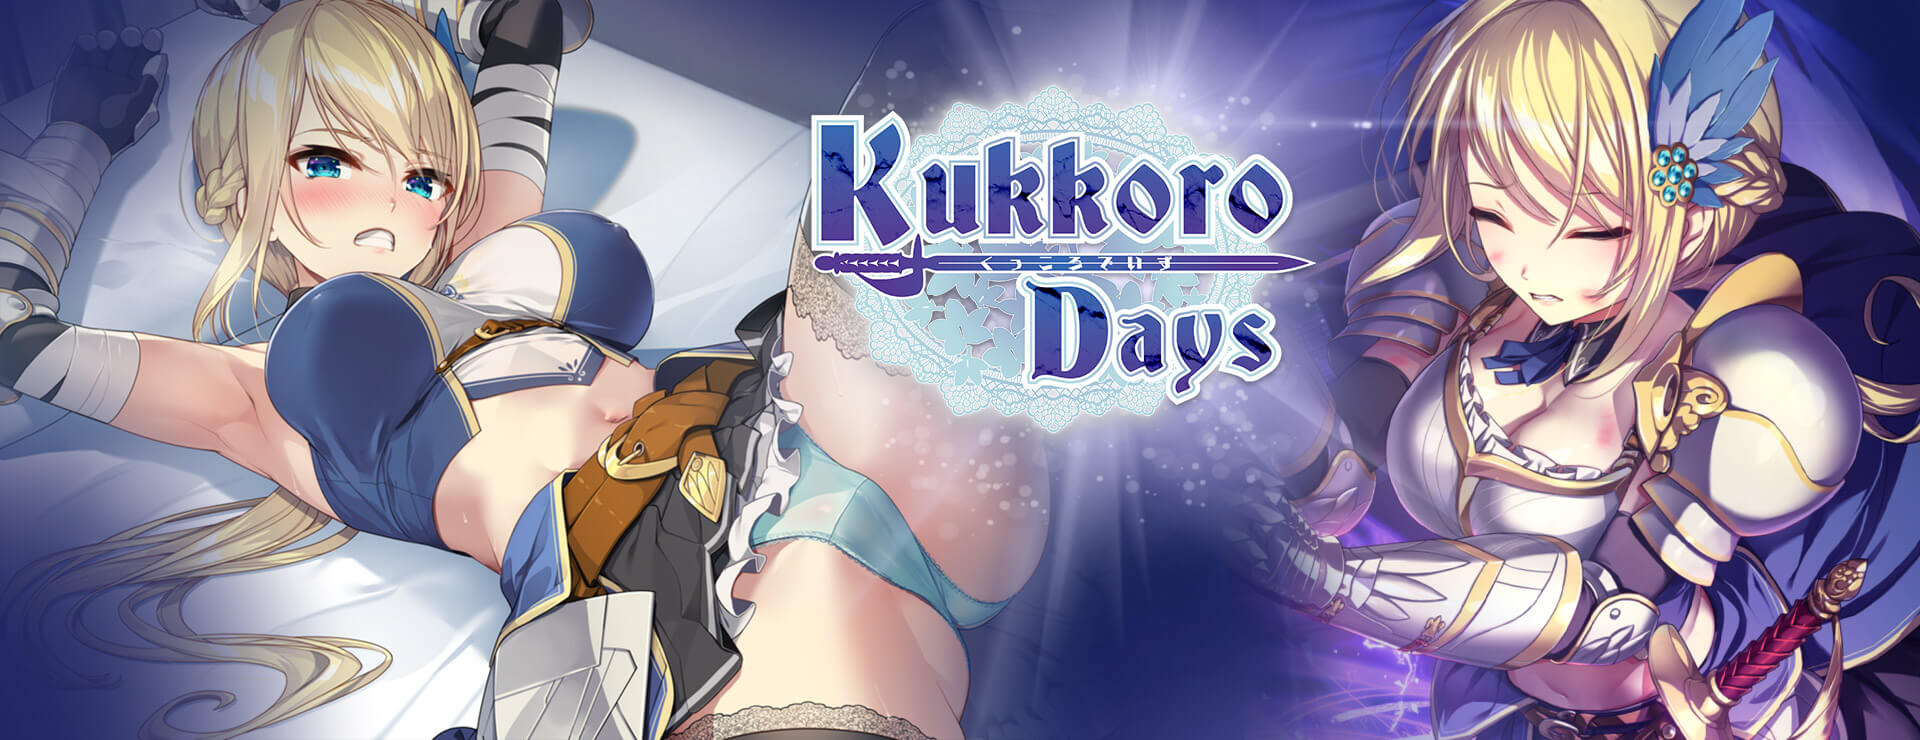 Kukkoro Days - Novela Visual Juego